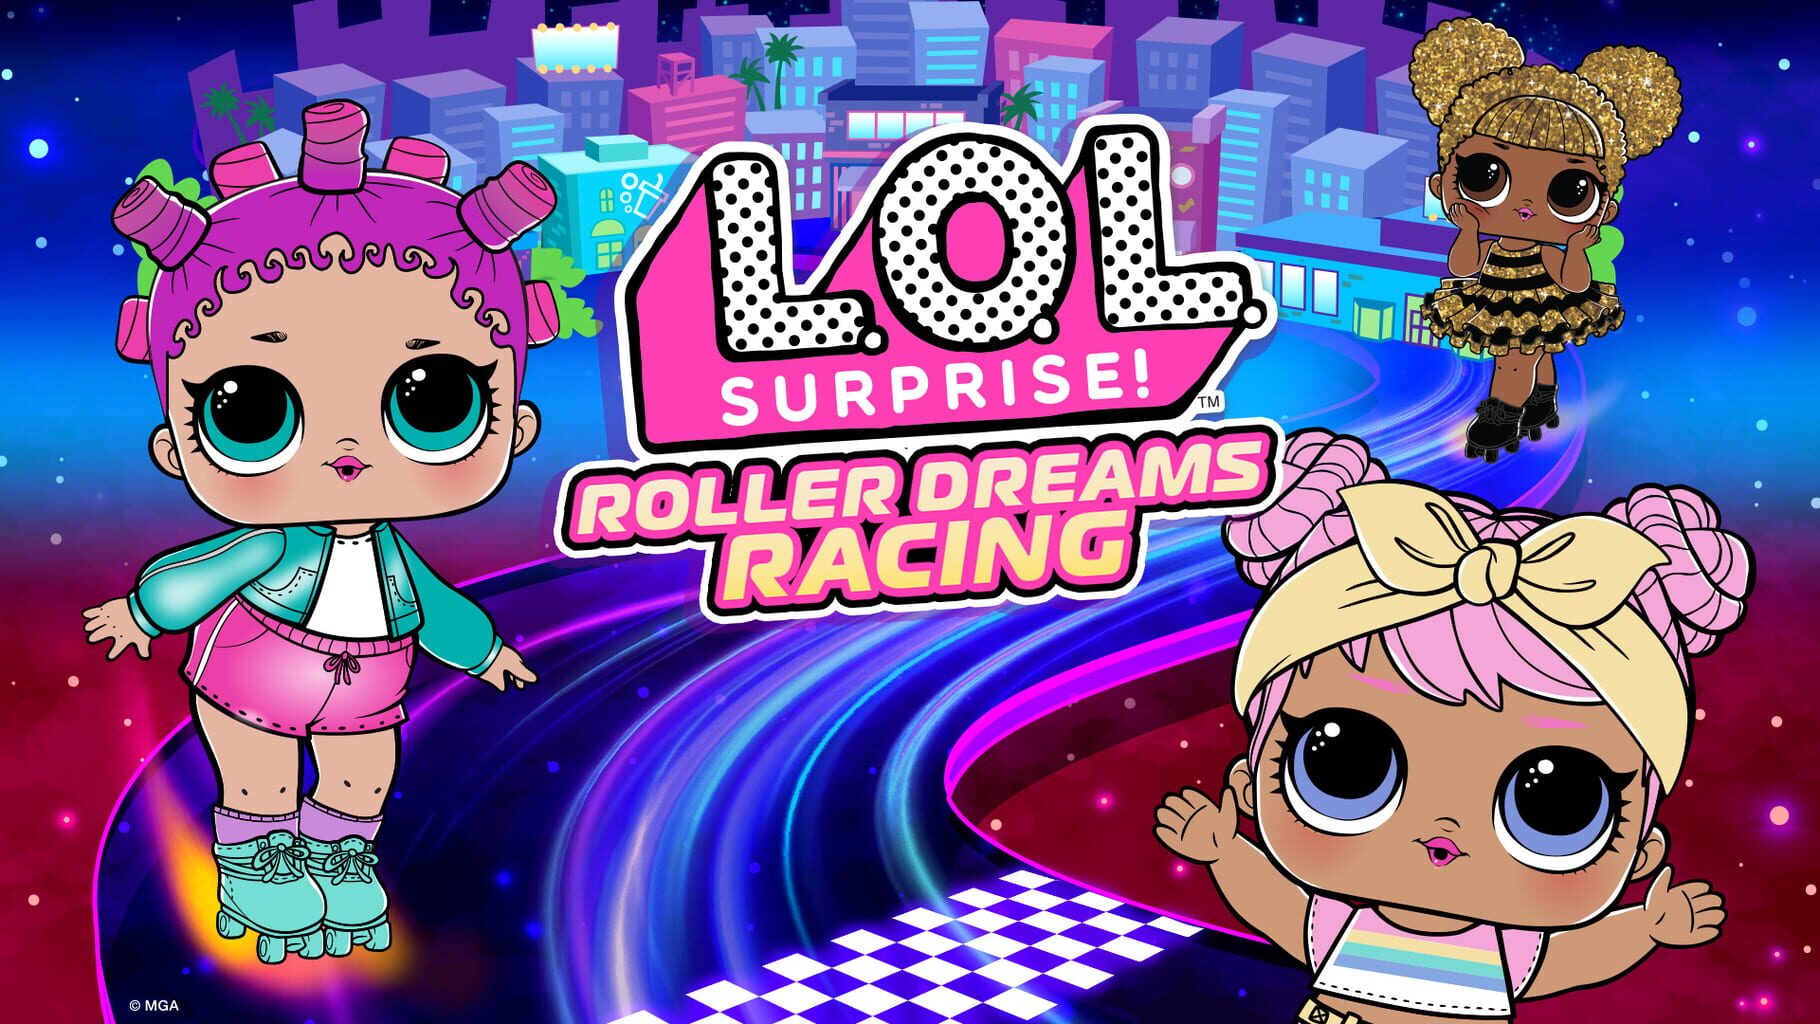 L.O.L. Surprise! Roller Dreams Racing Image